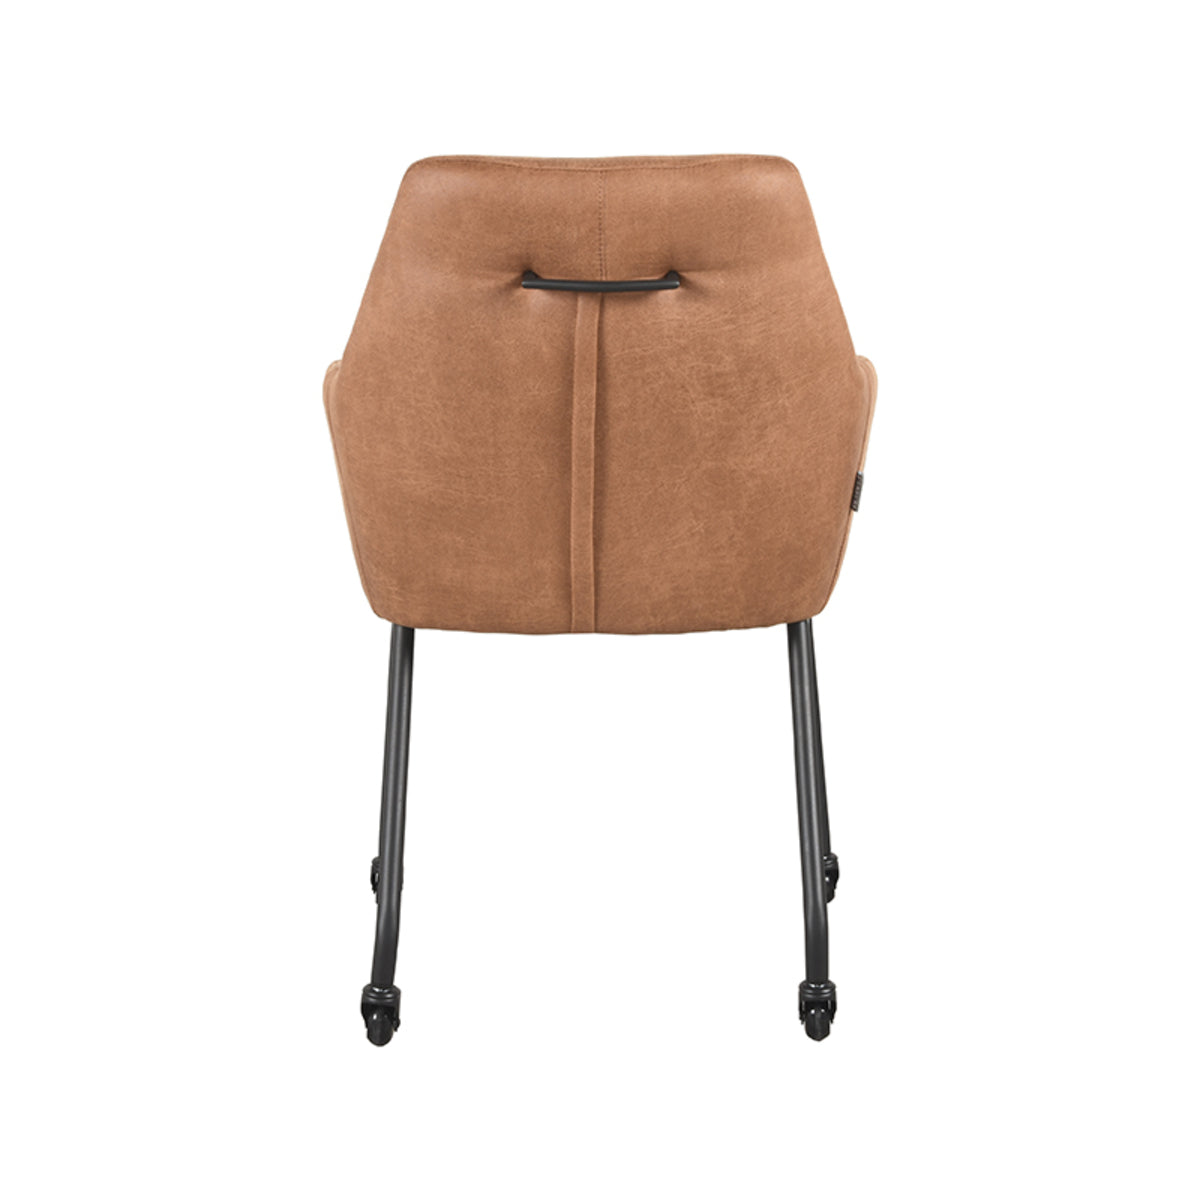 LABEL51 Dining room chair Lenny - Cognac - Microfiber | 2 pieces